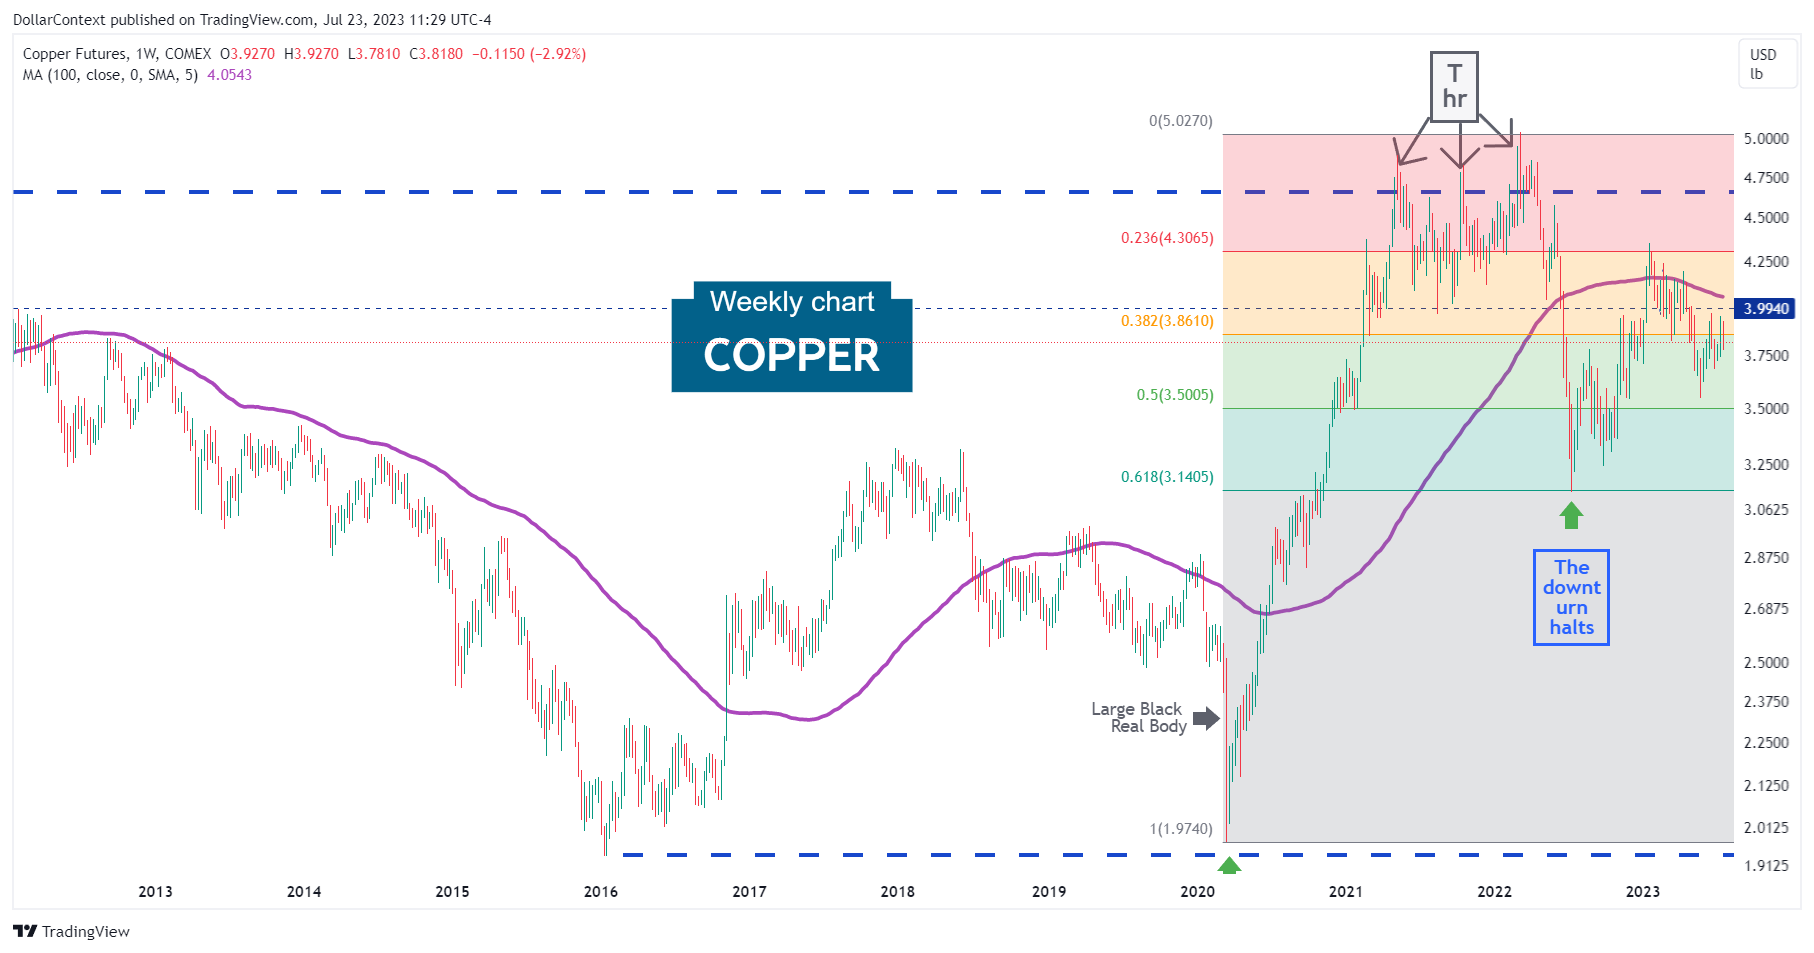 Copper Futures: Rebound Since July 2022